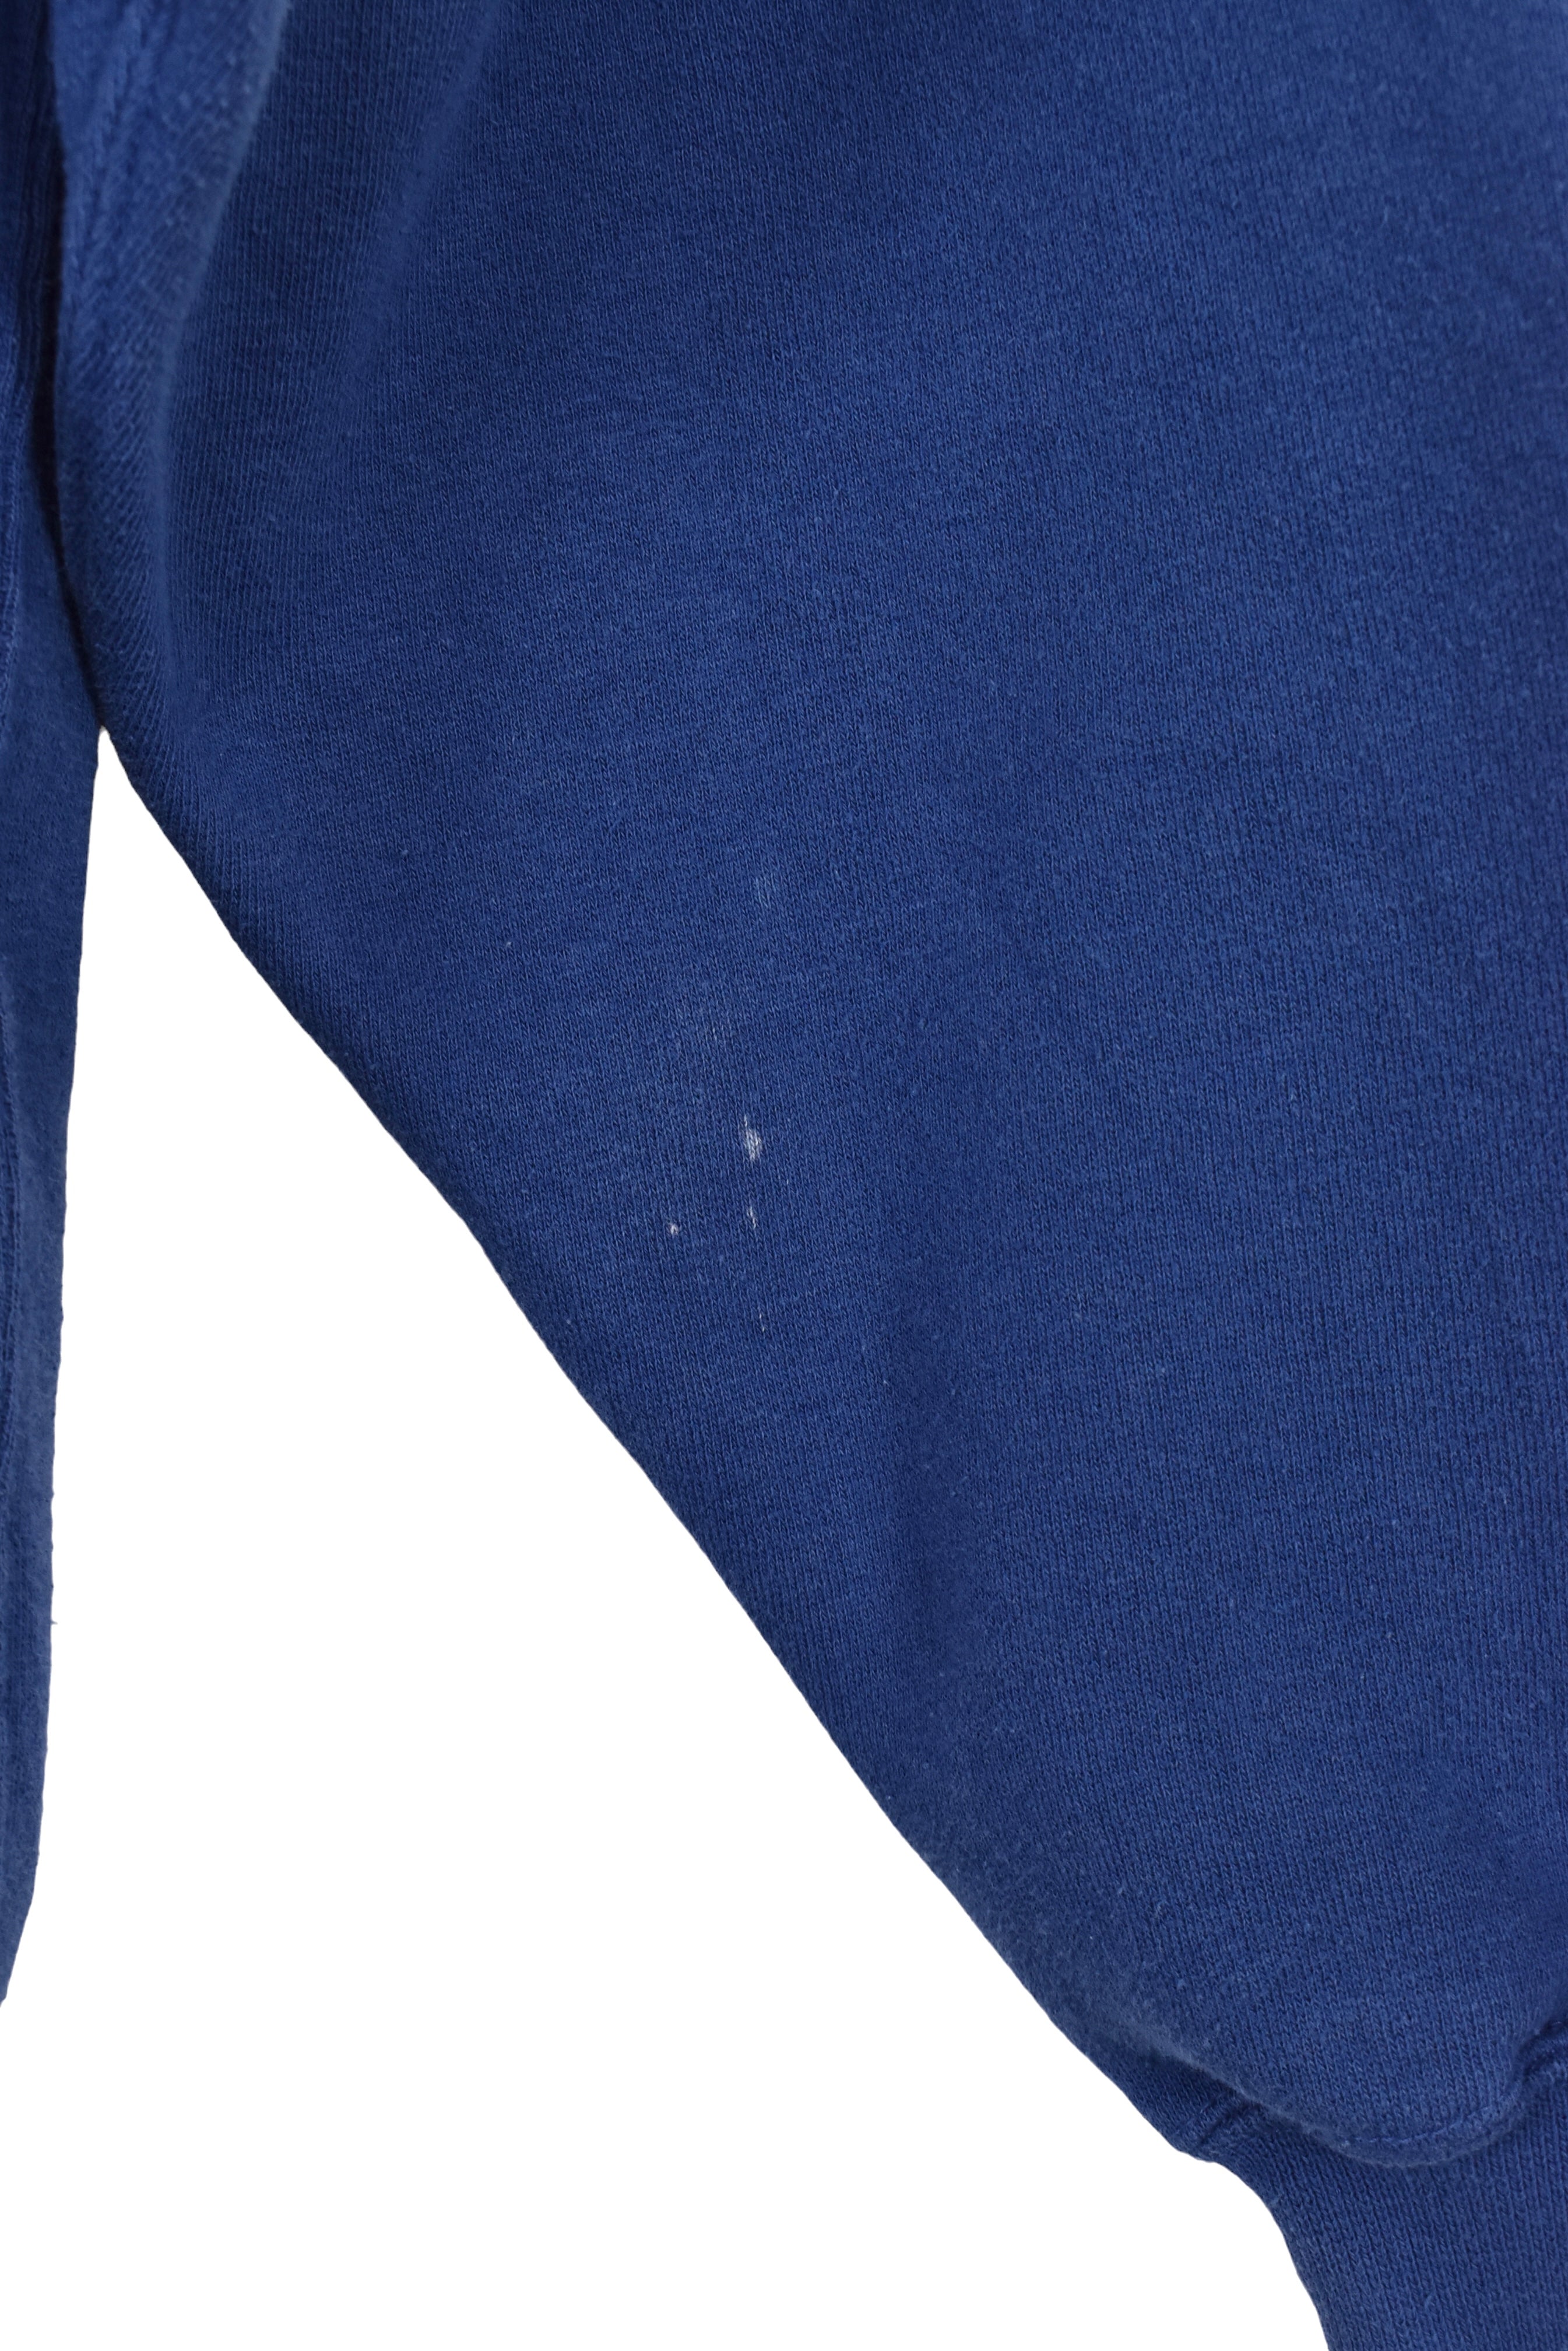 Vintage Seton Hall University sweatshirt, navy blue graphic crewneck - Large